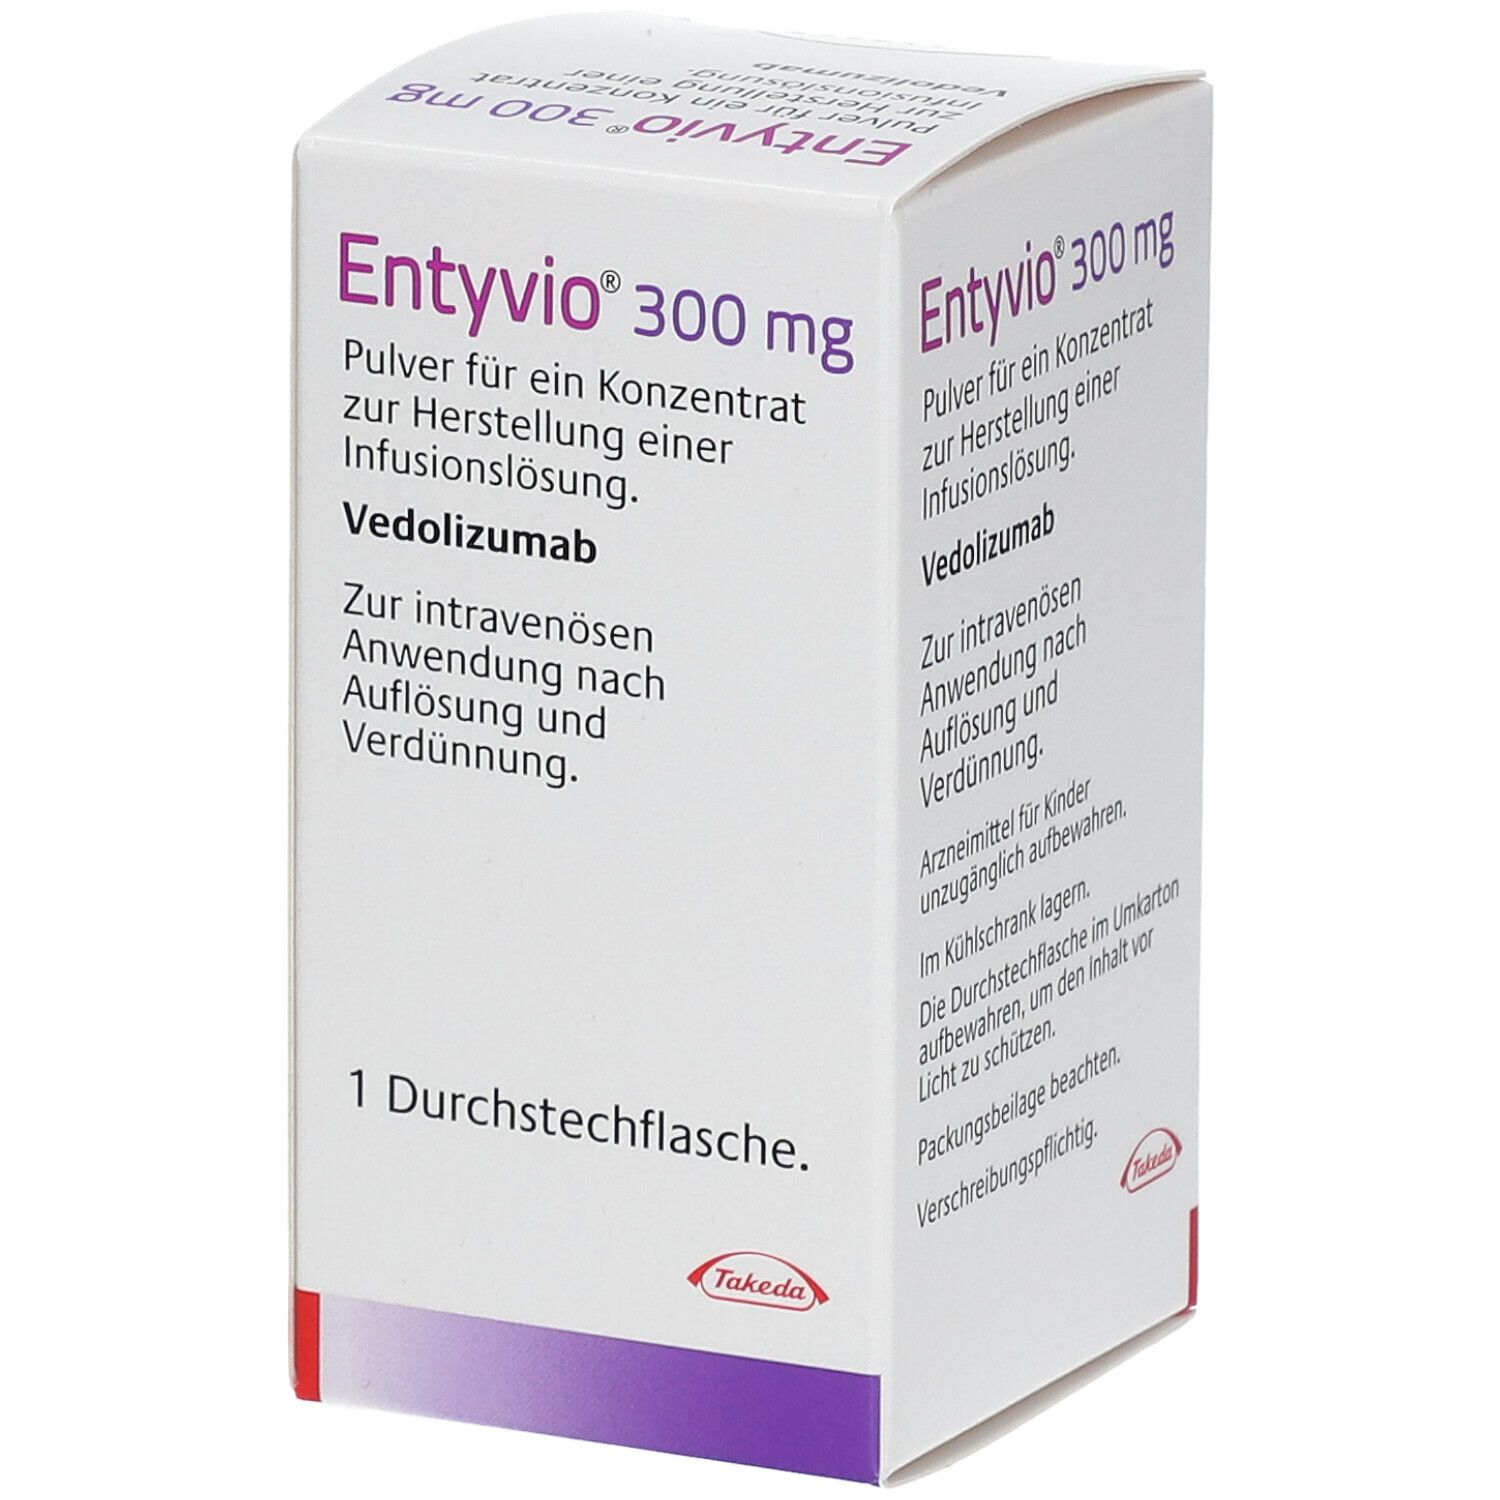 Entyvio® 300 mg